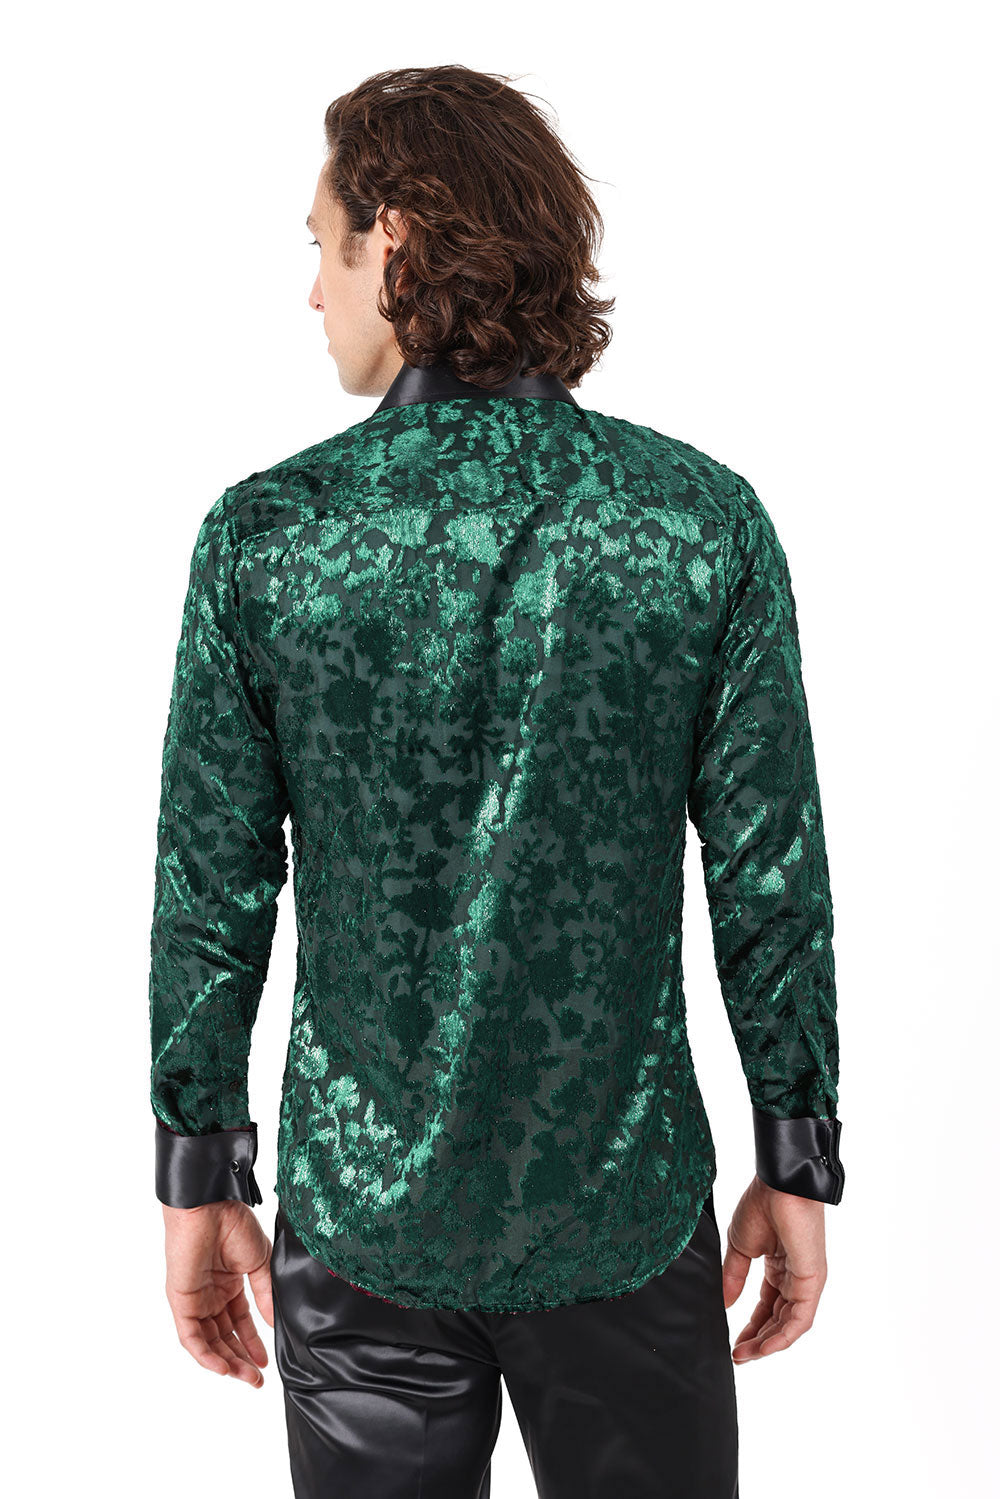 Barabas Men's Luxury French Cuff Long Sleeve Button Down Shirt FCS1003 Emerald